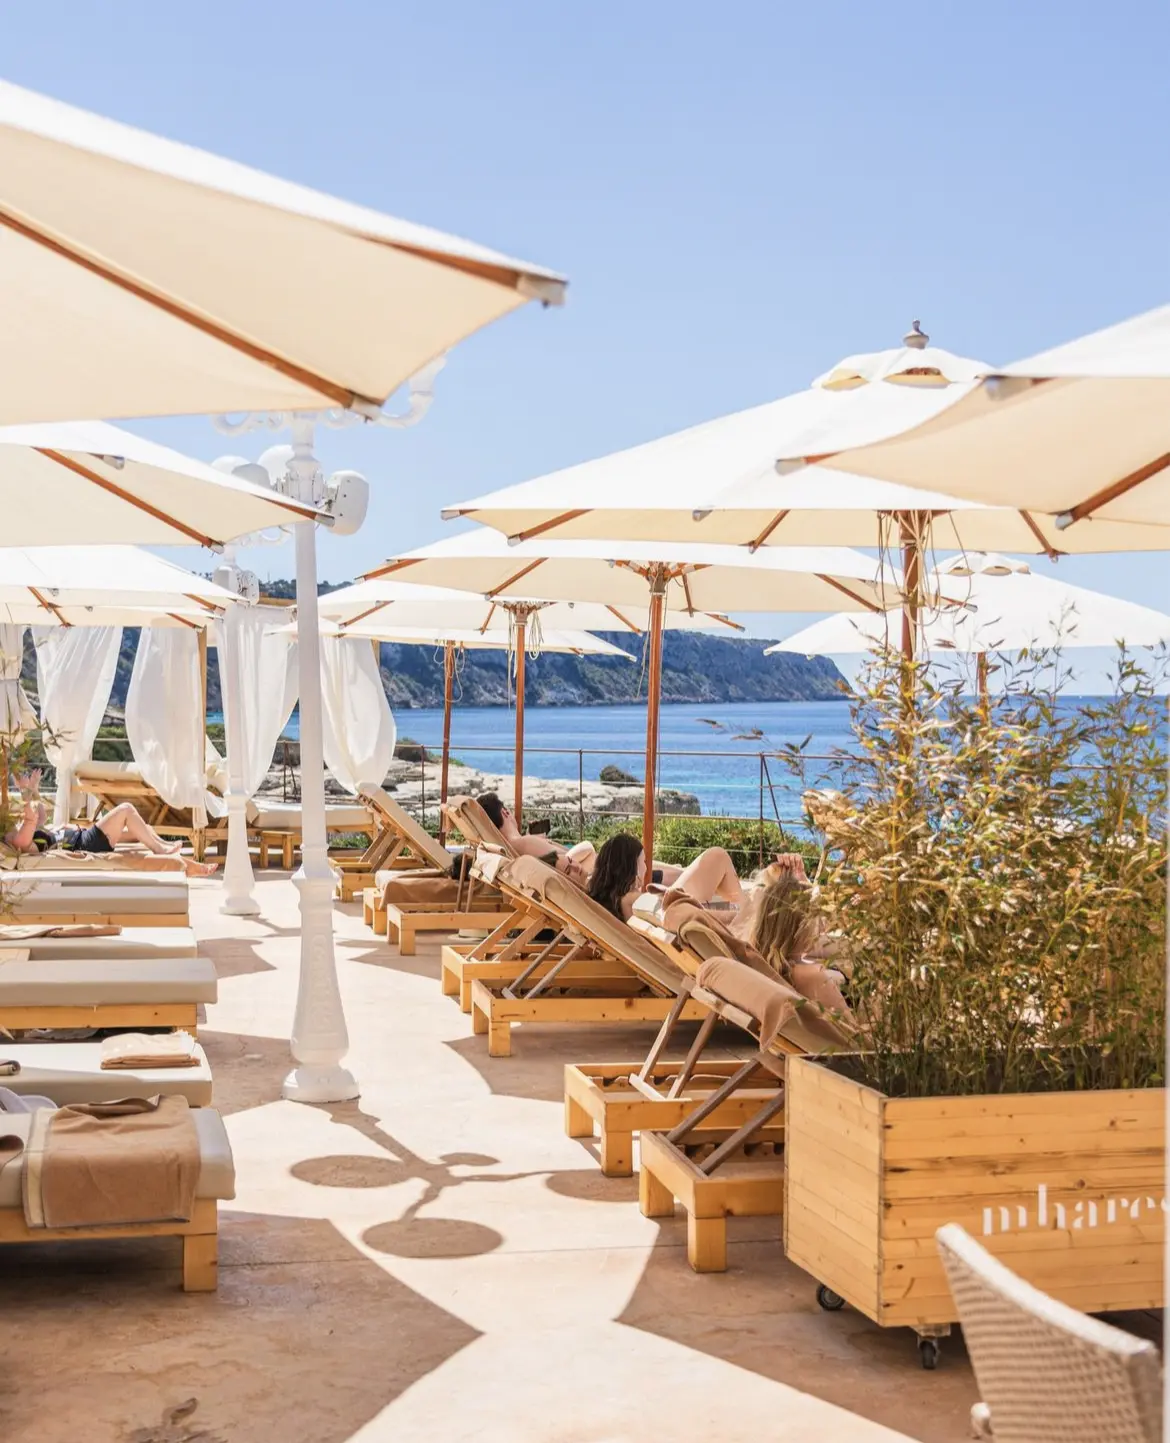 Mhares Beach Club, Mallorca